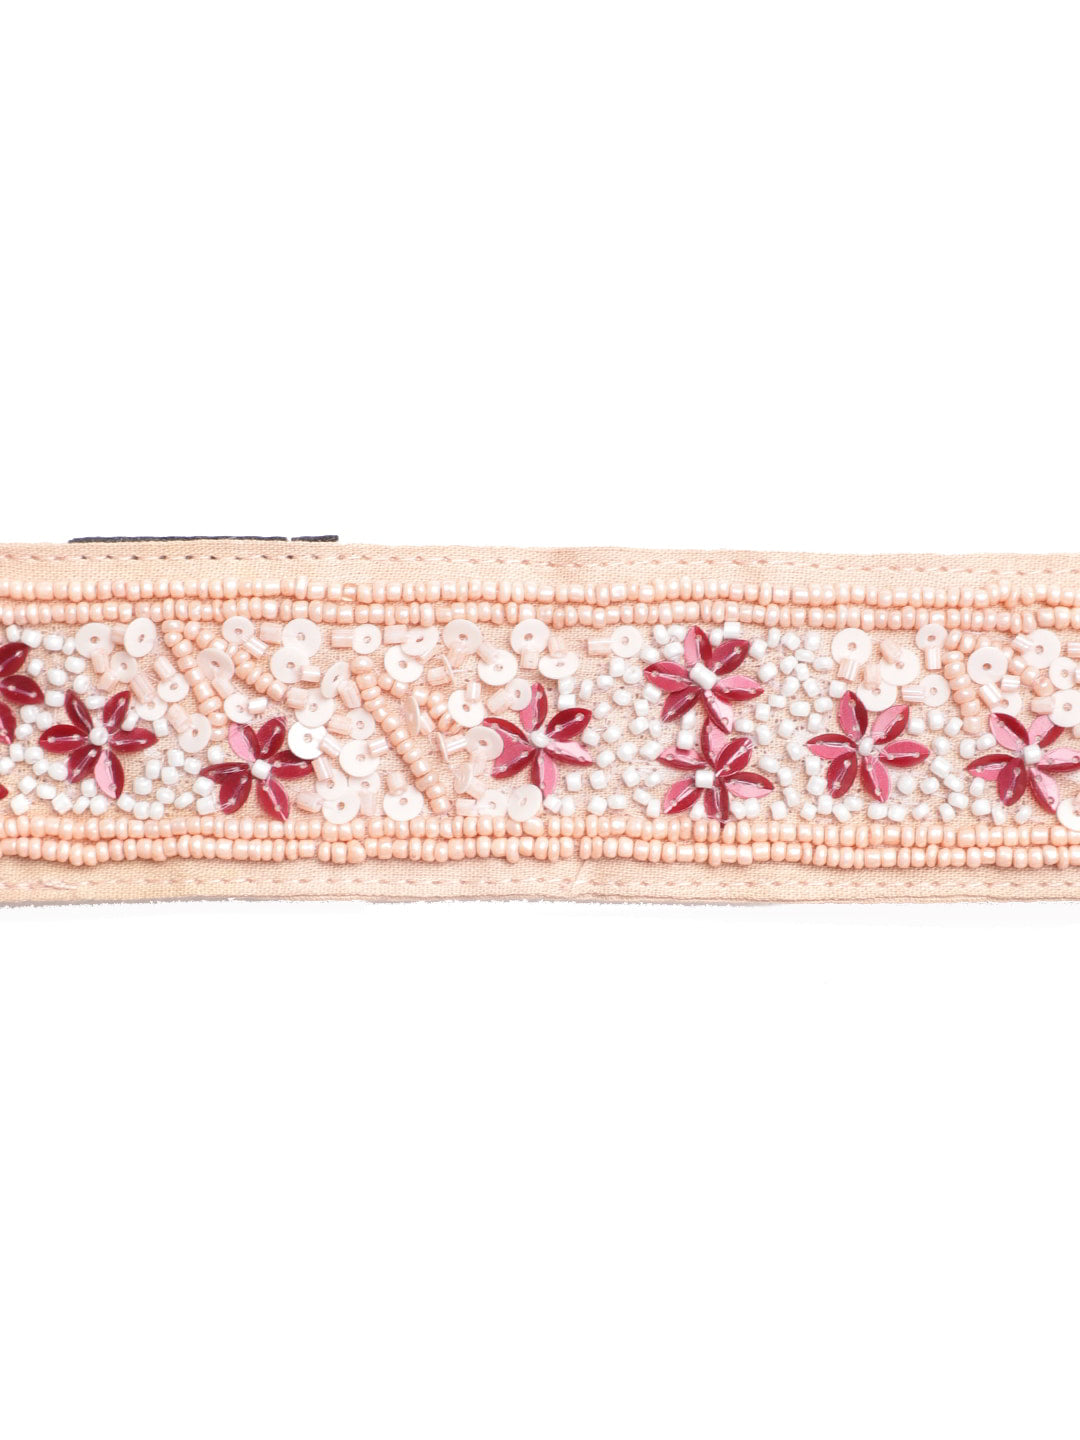 Floral Sequined Cotton Belt